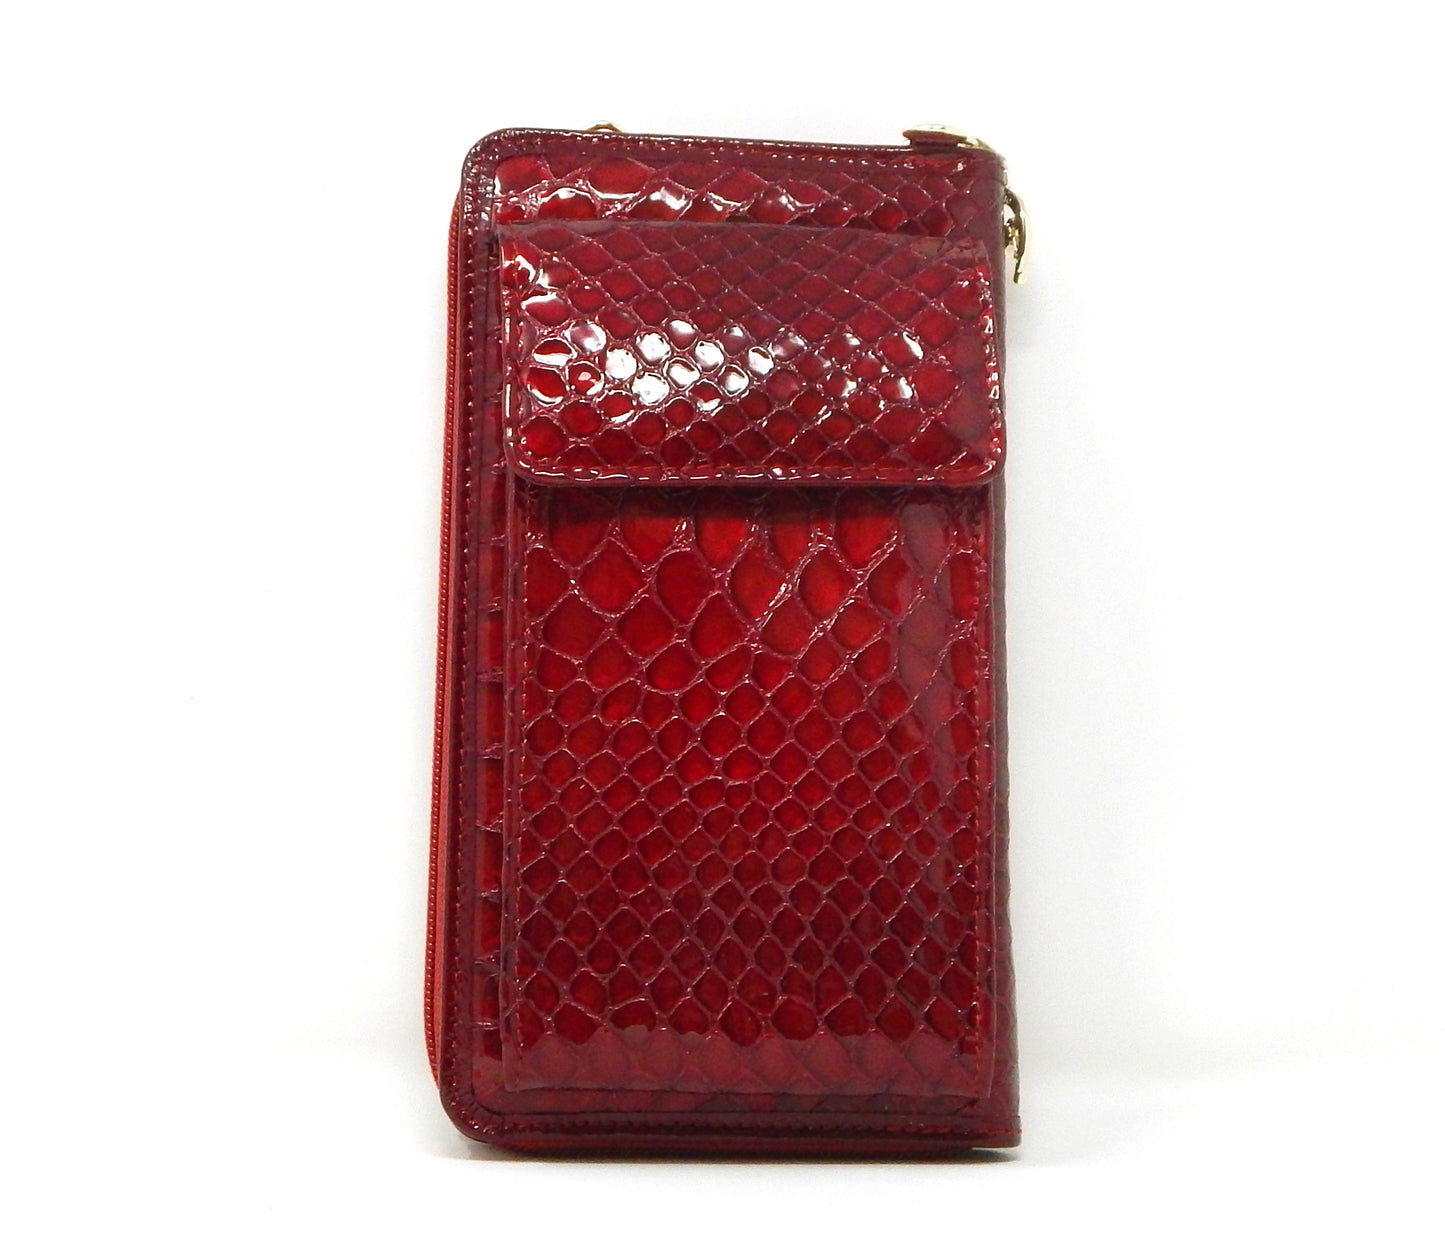 Cavalinho Gallop Phone Crossbody Bag & Wallet - DarkRed - 28170282.04.99_3